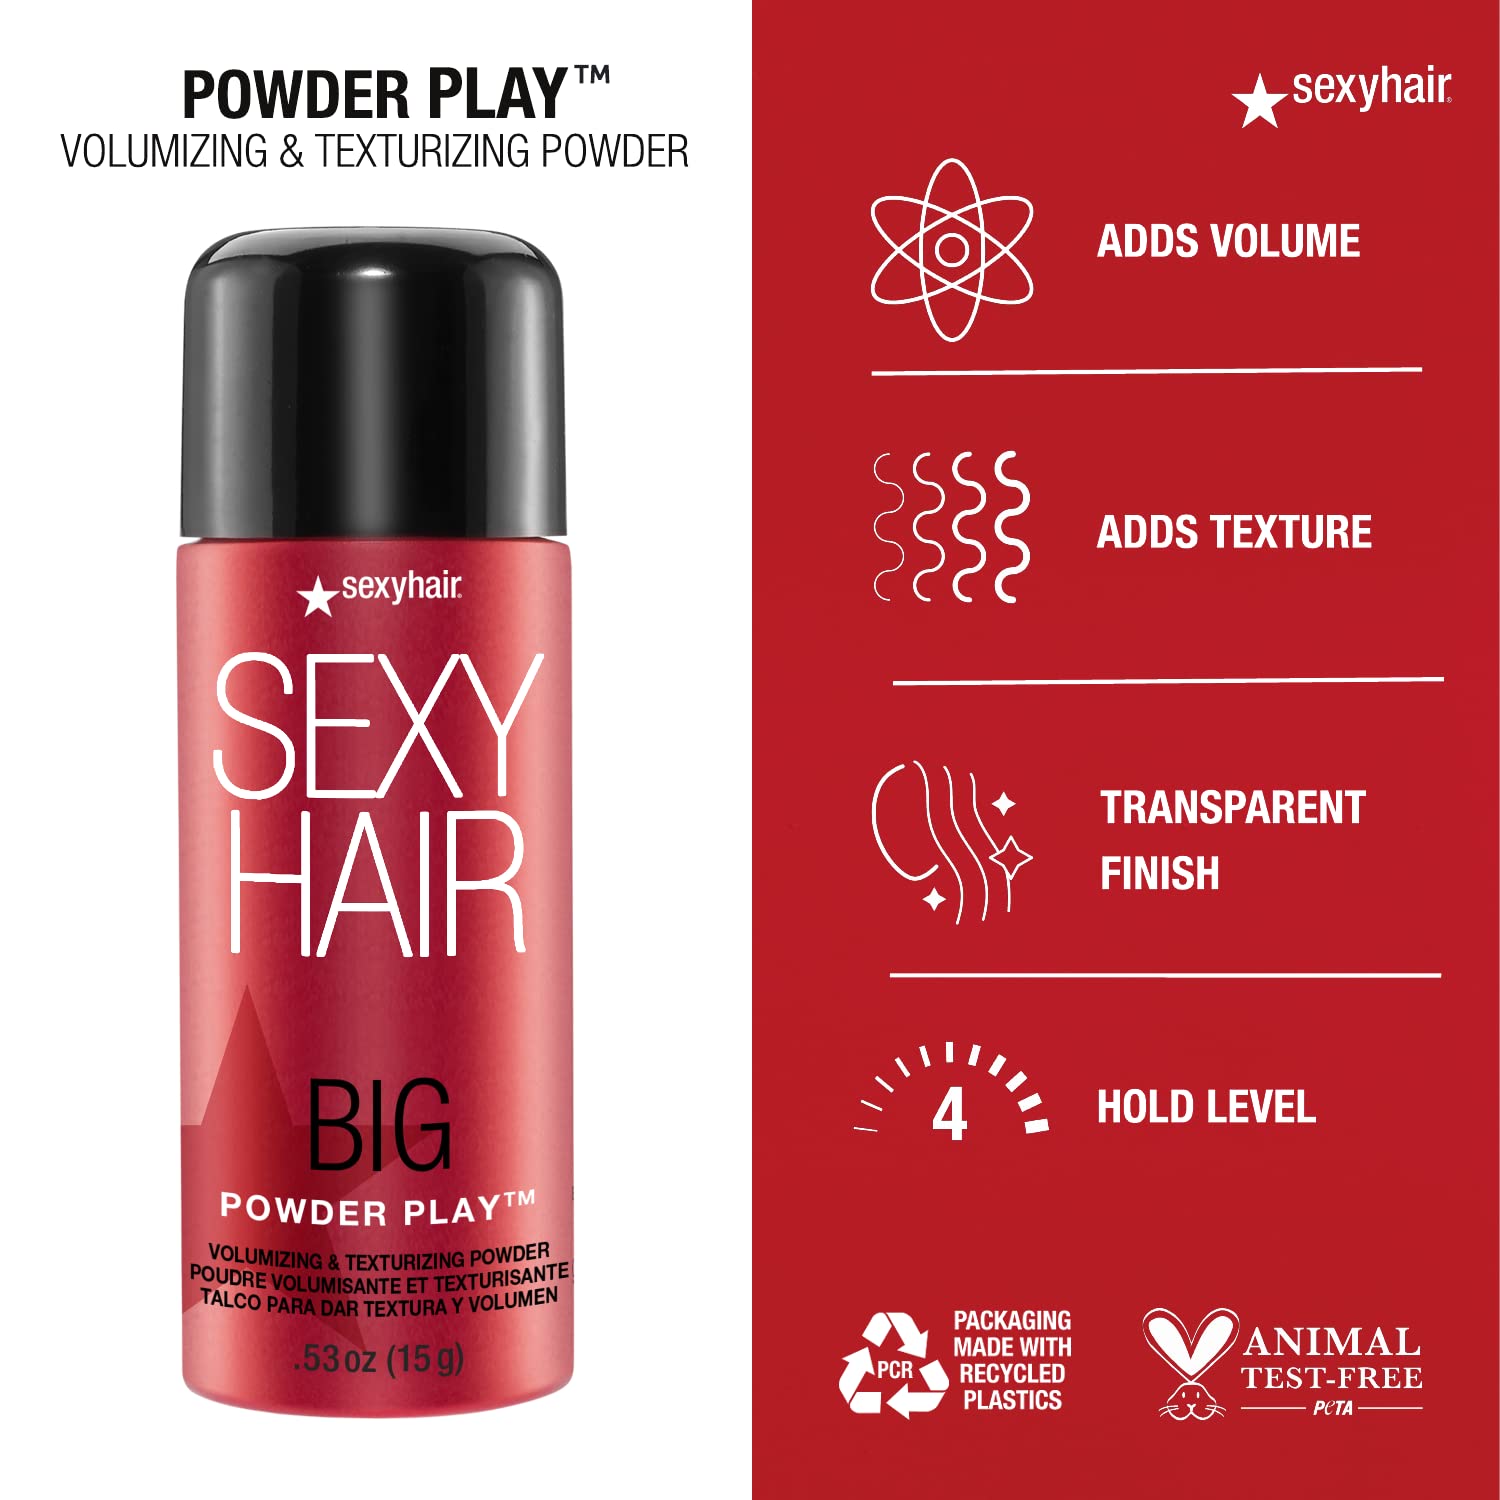 SexyHair Big Powder Play Volumizing  Texturizing Powder | Colorless on Hair | Fragrance Free | Instant Lift